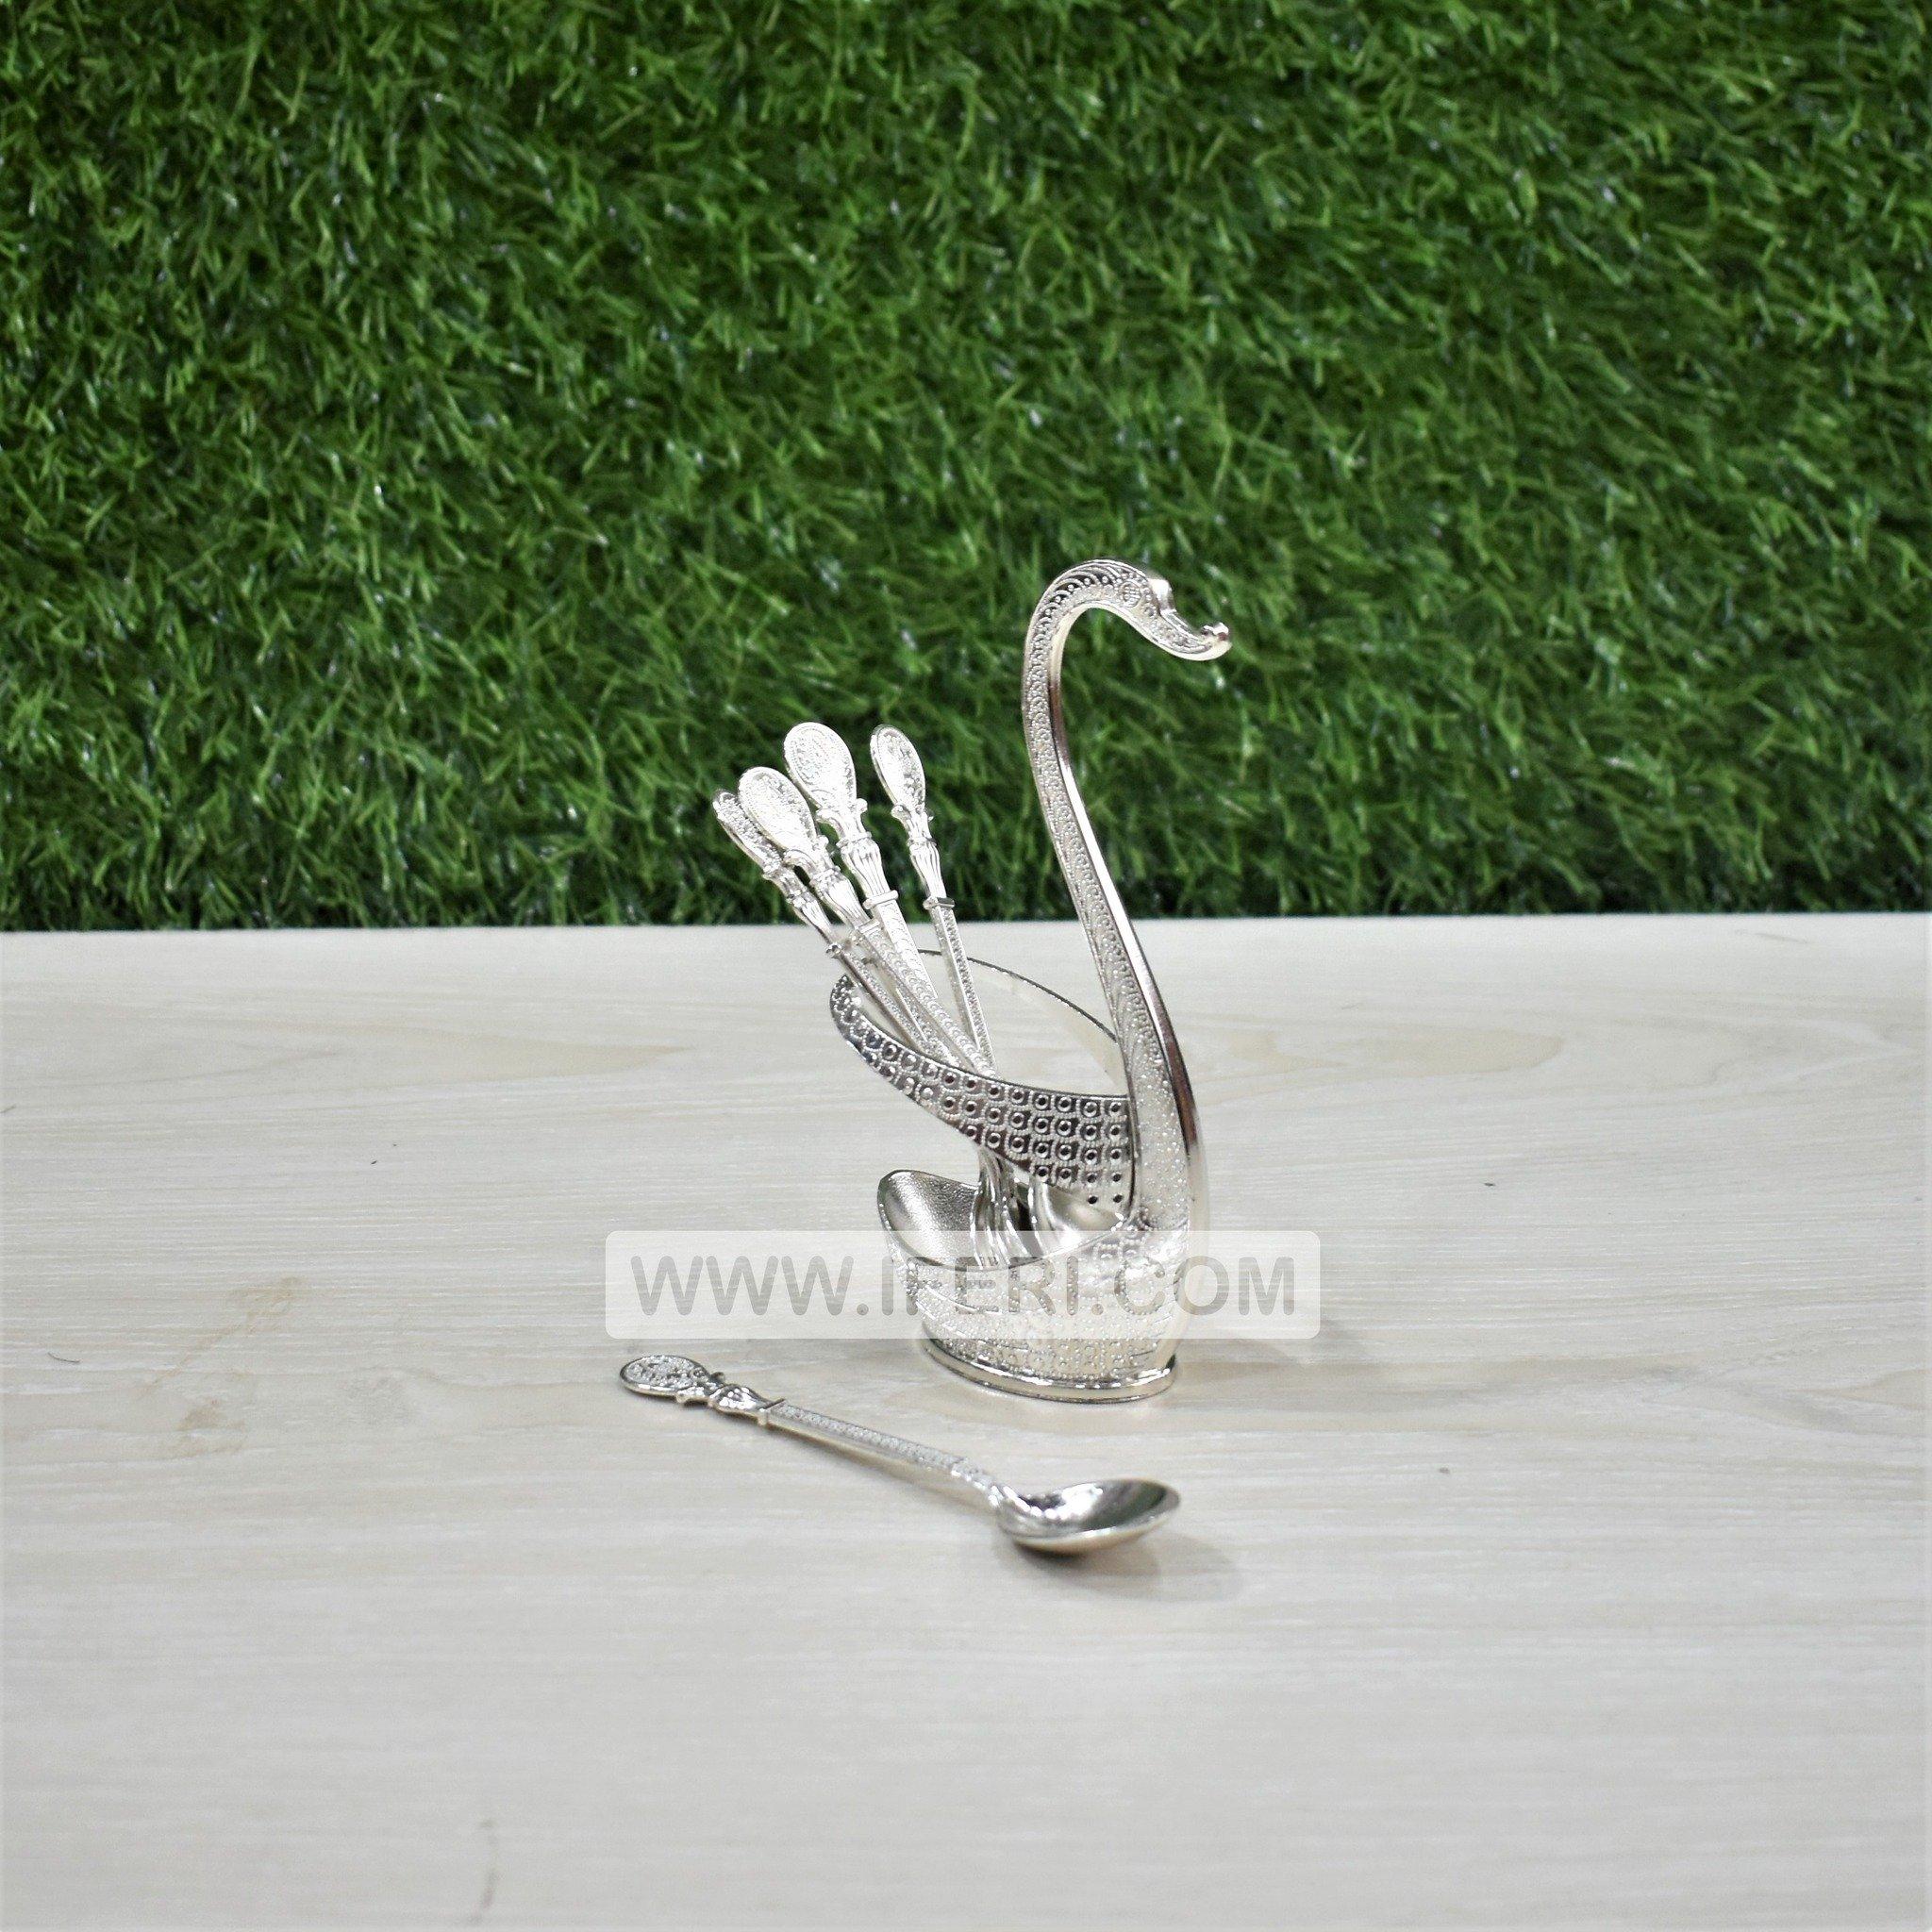 Swan Spoon Set RR6787 - Price in BD at iferi.com